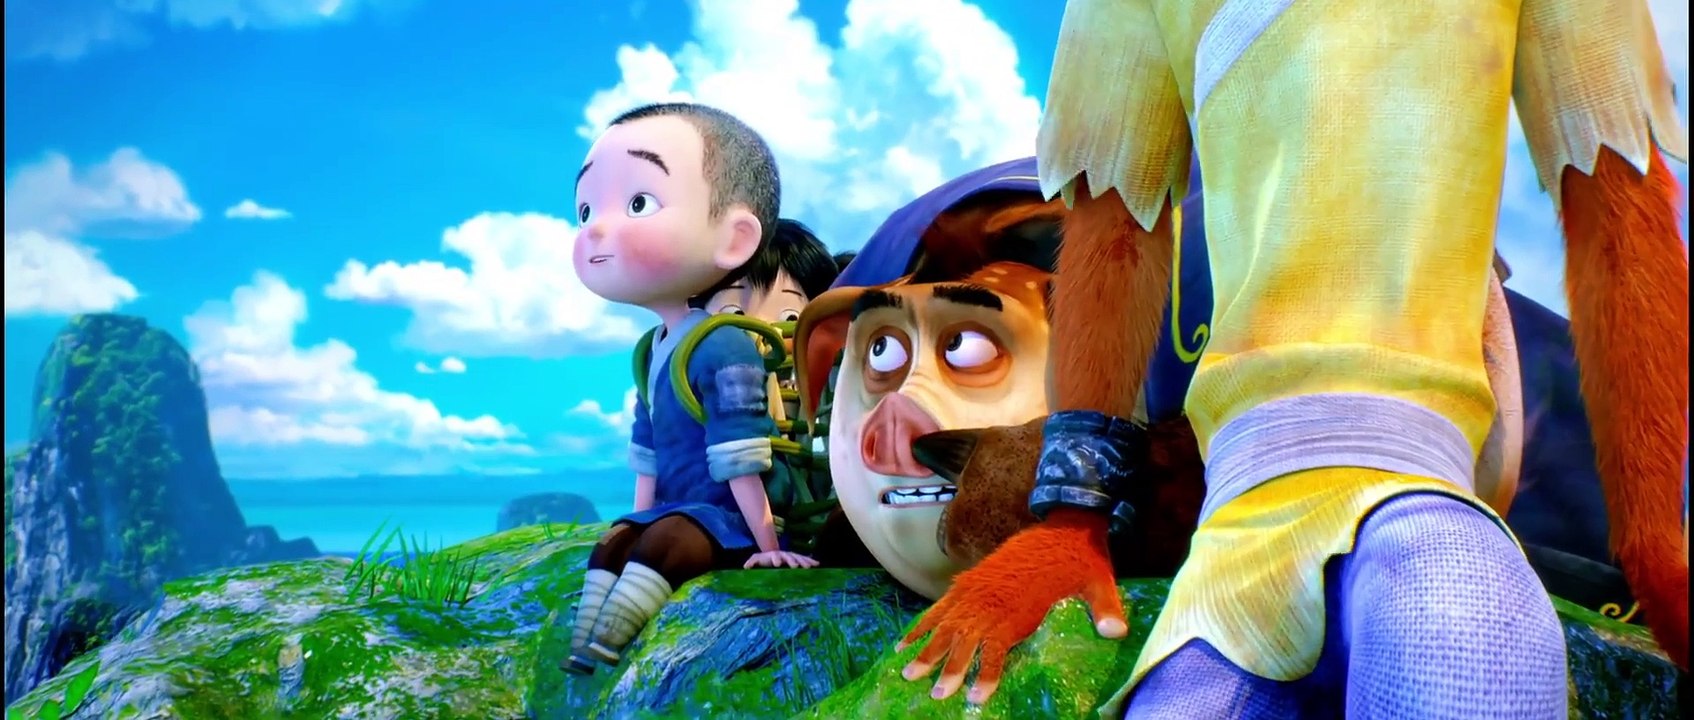 Monkey King Hero is Back Full Movie Watch Online 123Movies